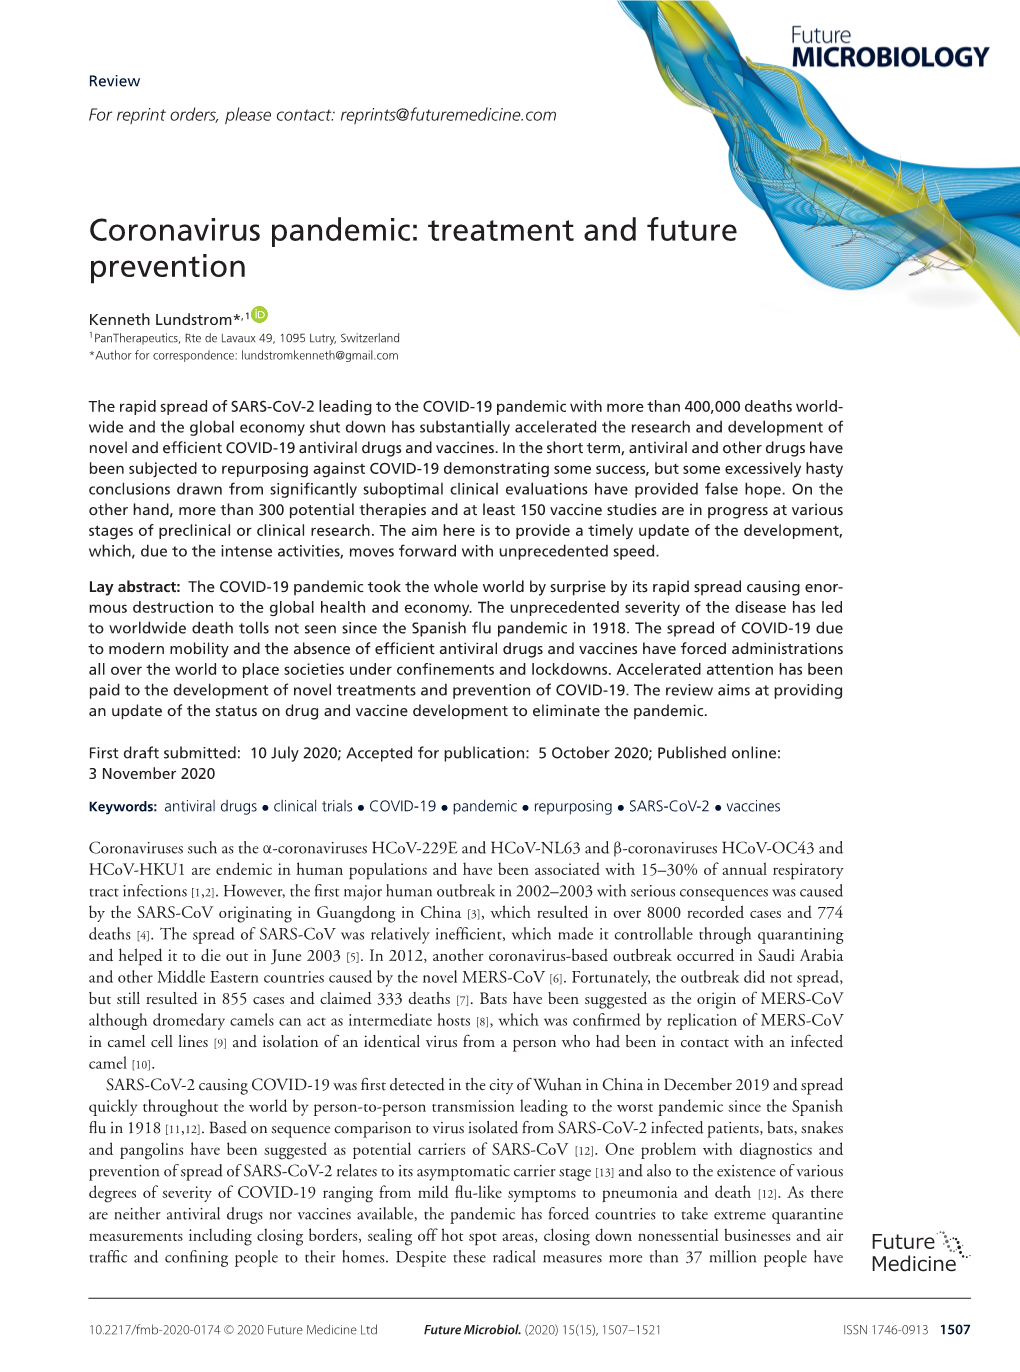 Coronavirus Pandemic: Treatment and Future Prevention